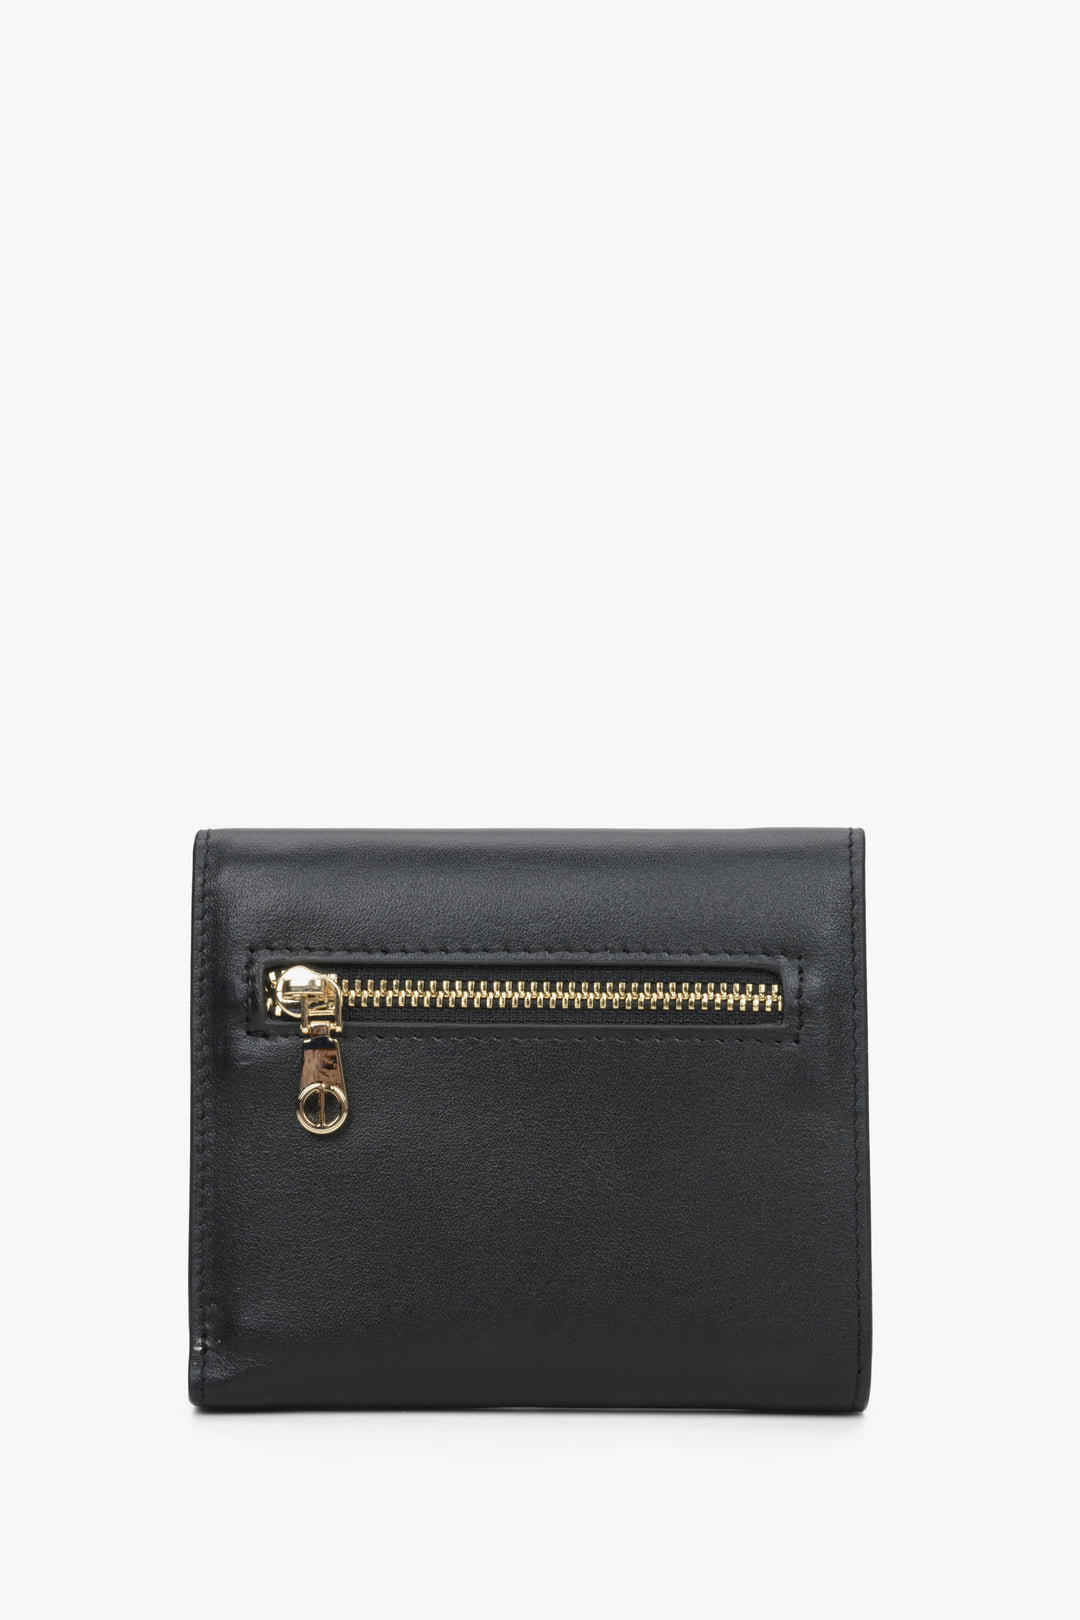 Women's black wallet made of genuine leather - back side.